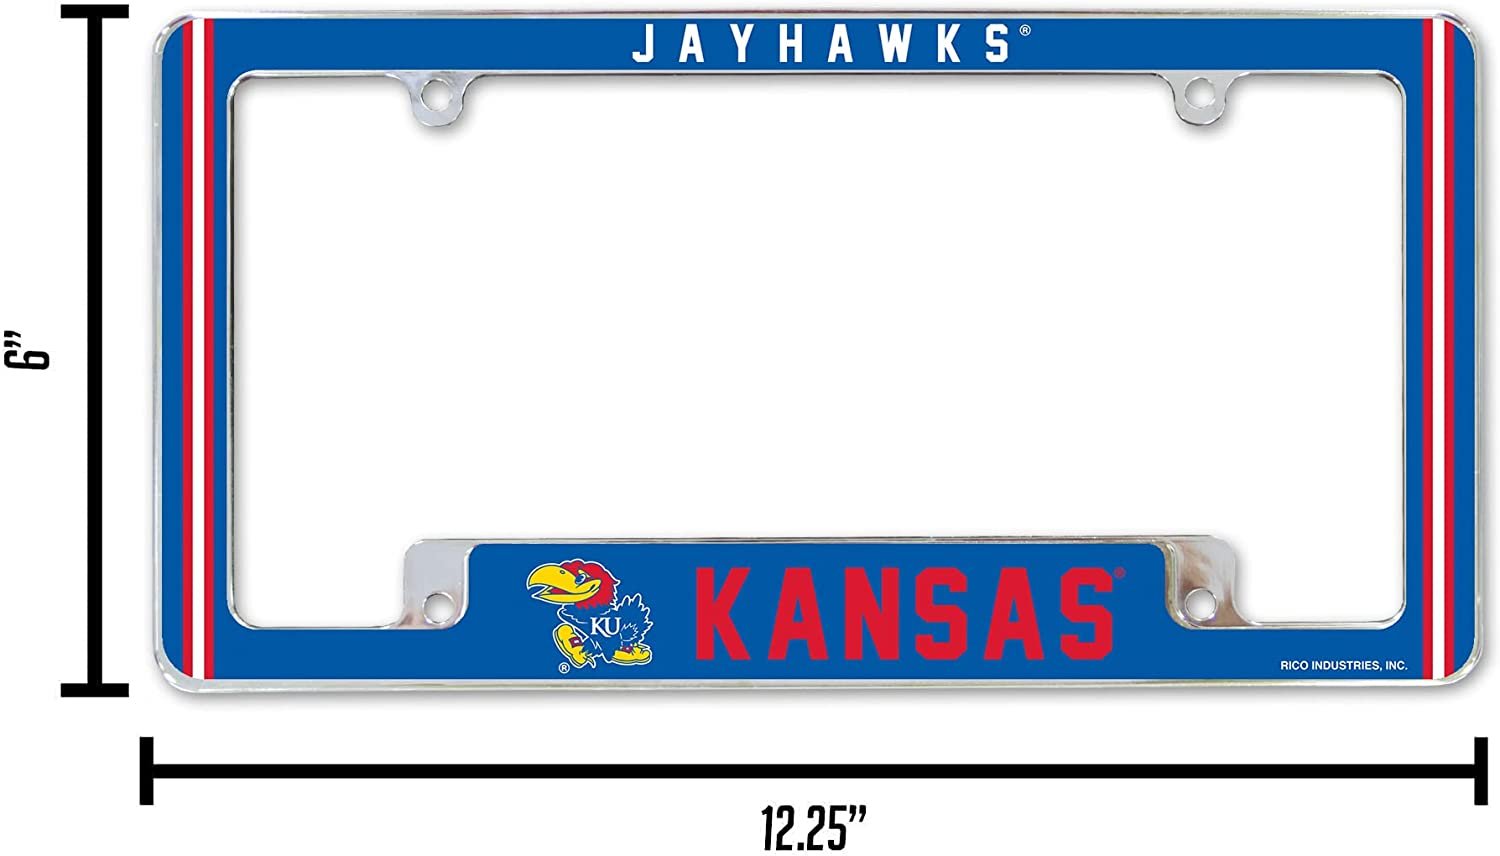 University of Kansas Jayhawks Metal License Plate Frame Chrome Tag Cover Alternate Design 6x12 Inch